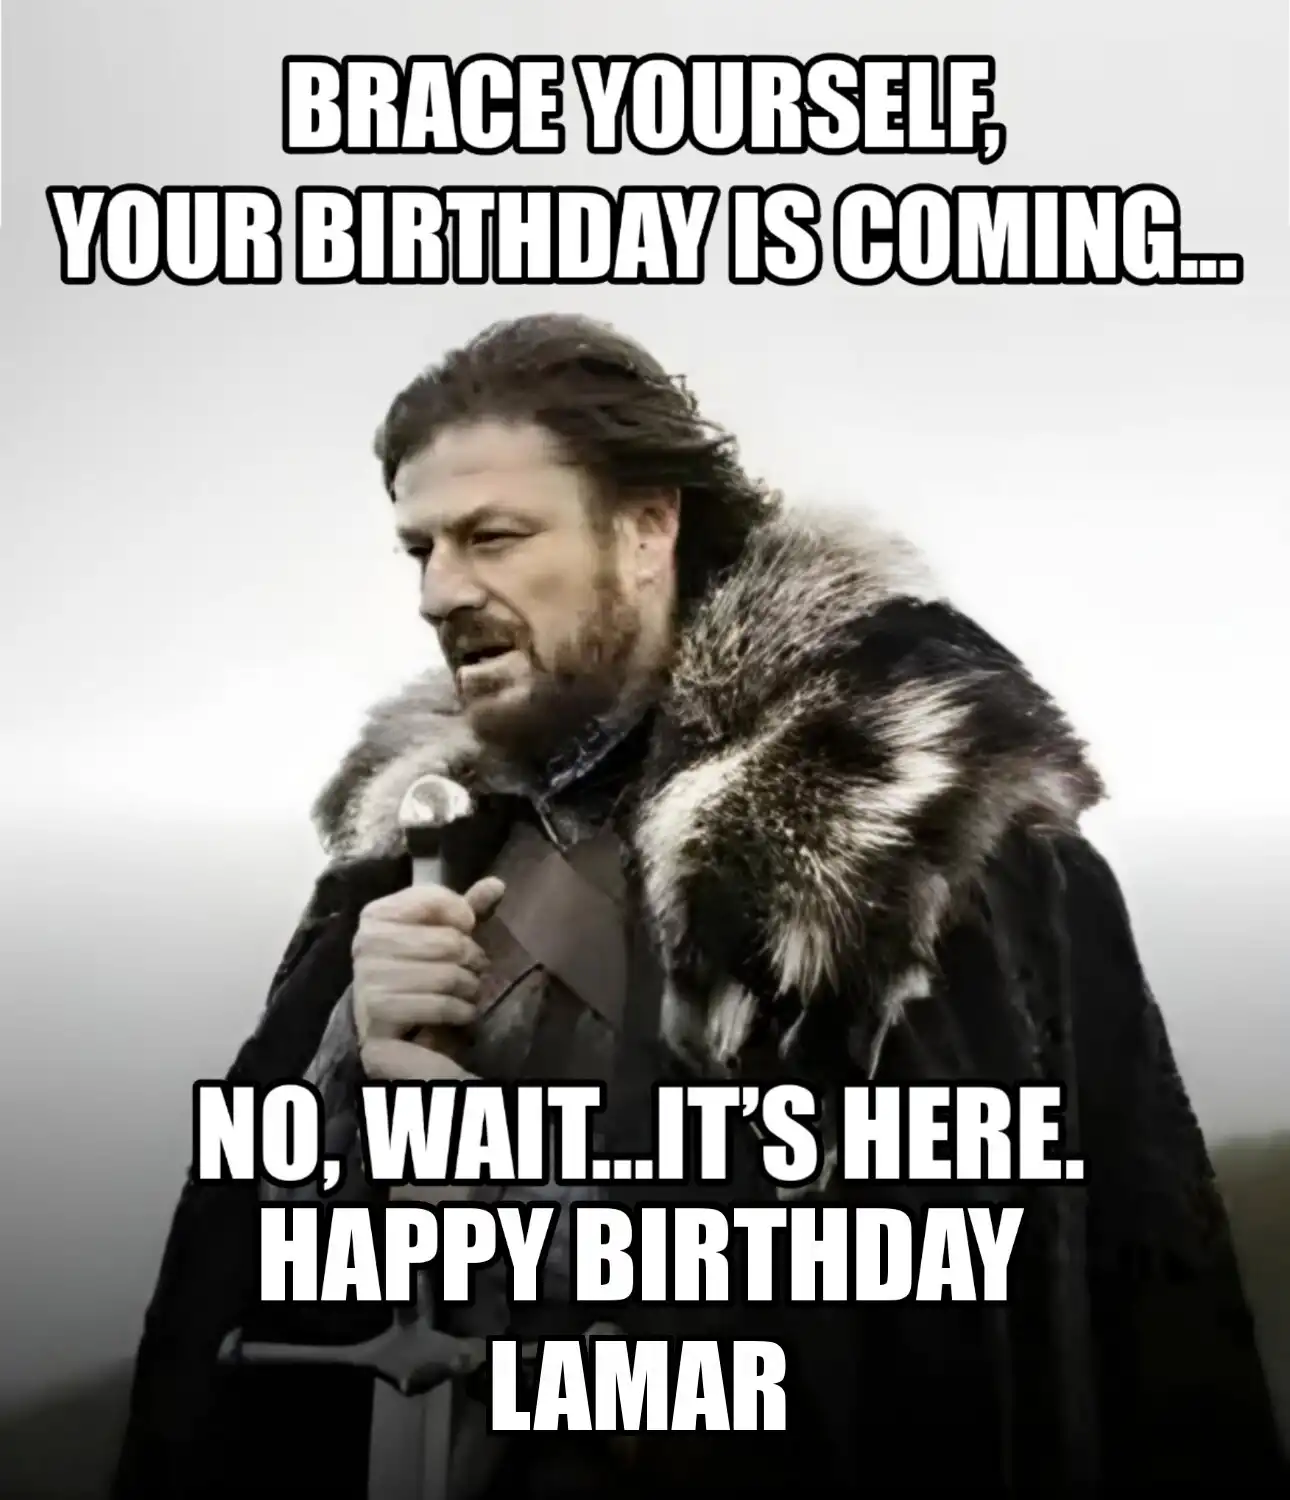 Happy Birthday Lamar Brace Yourself Your Birthday Is Coming Meme